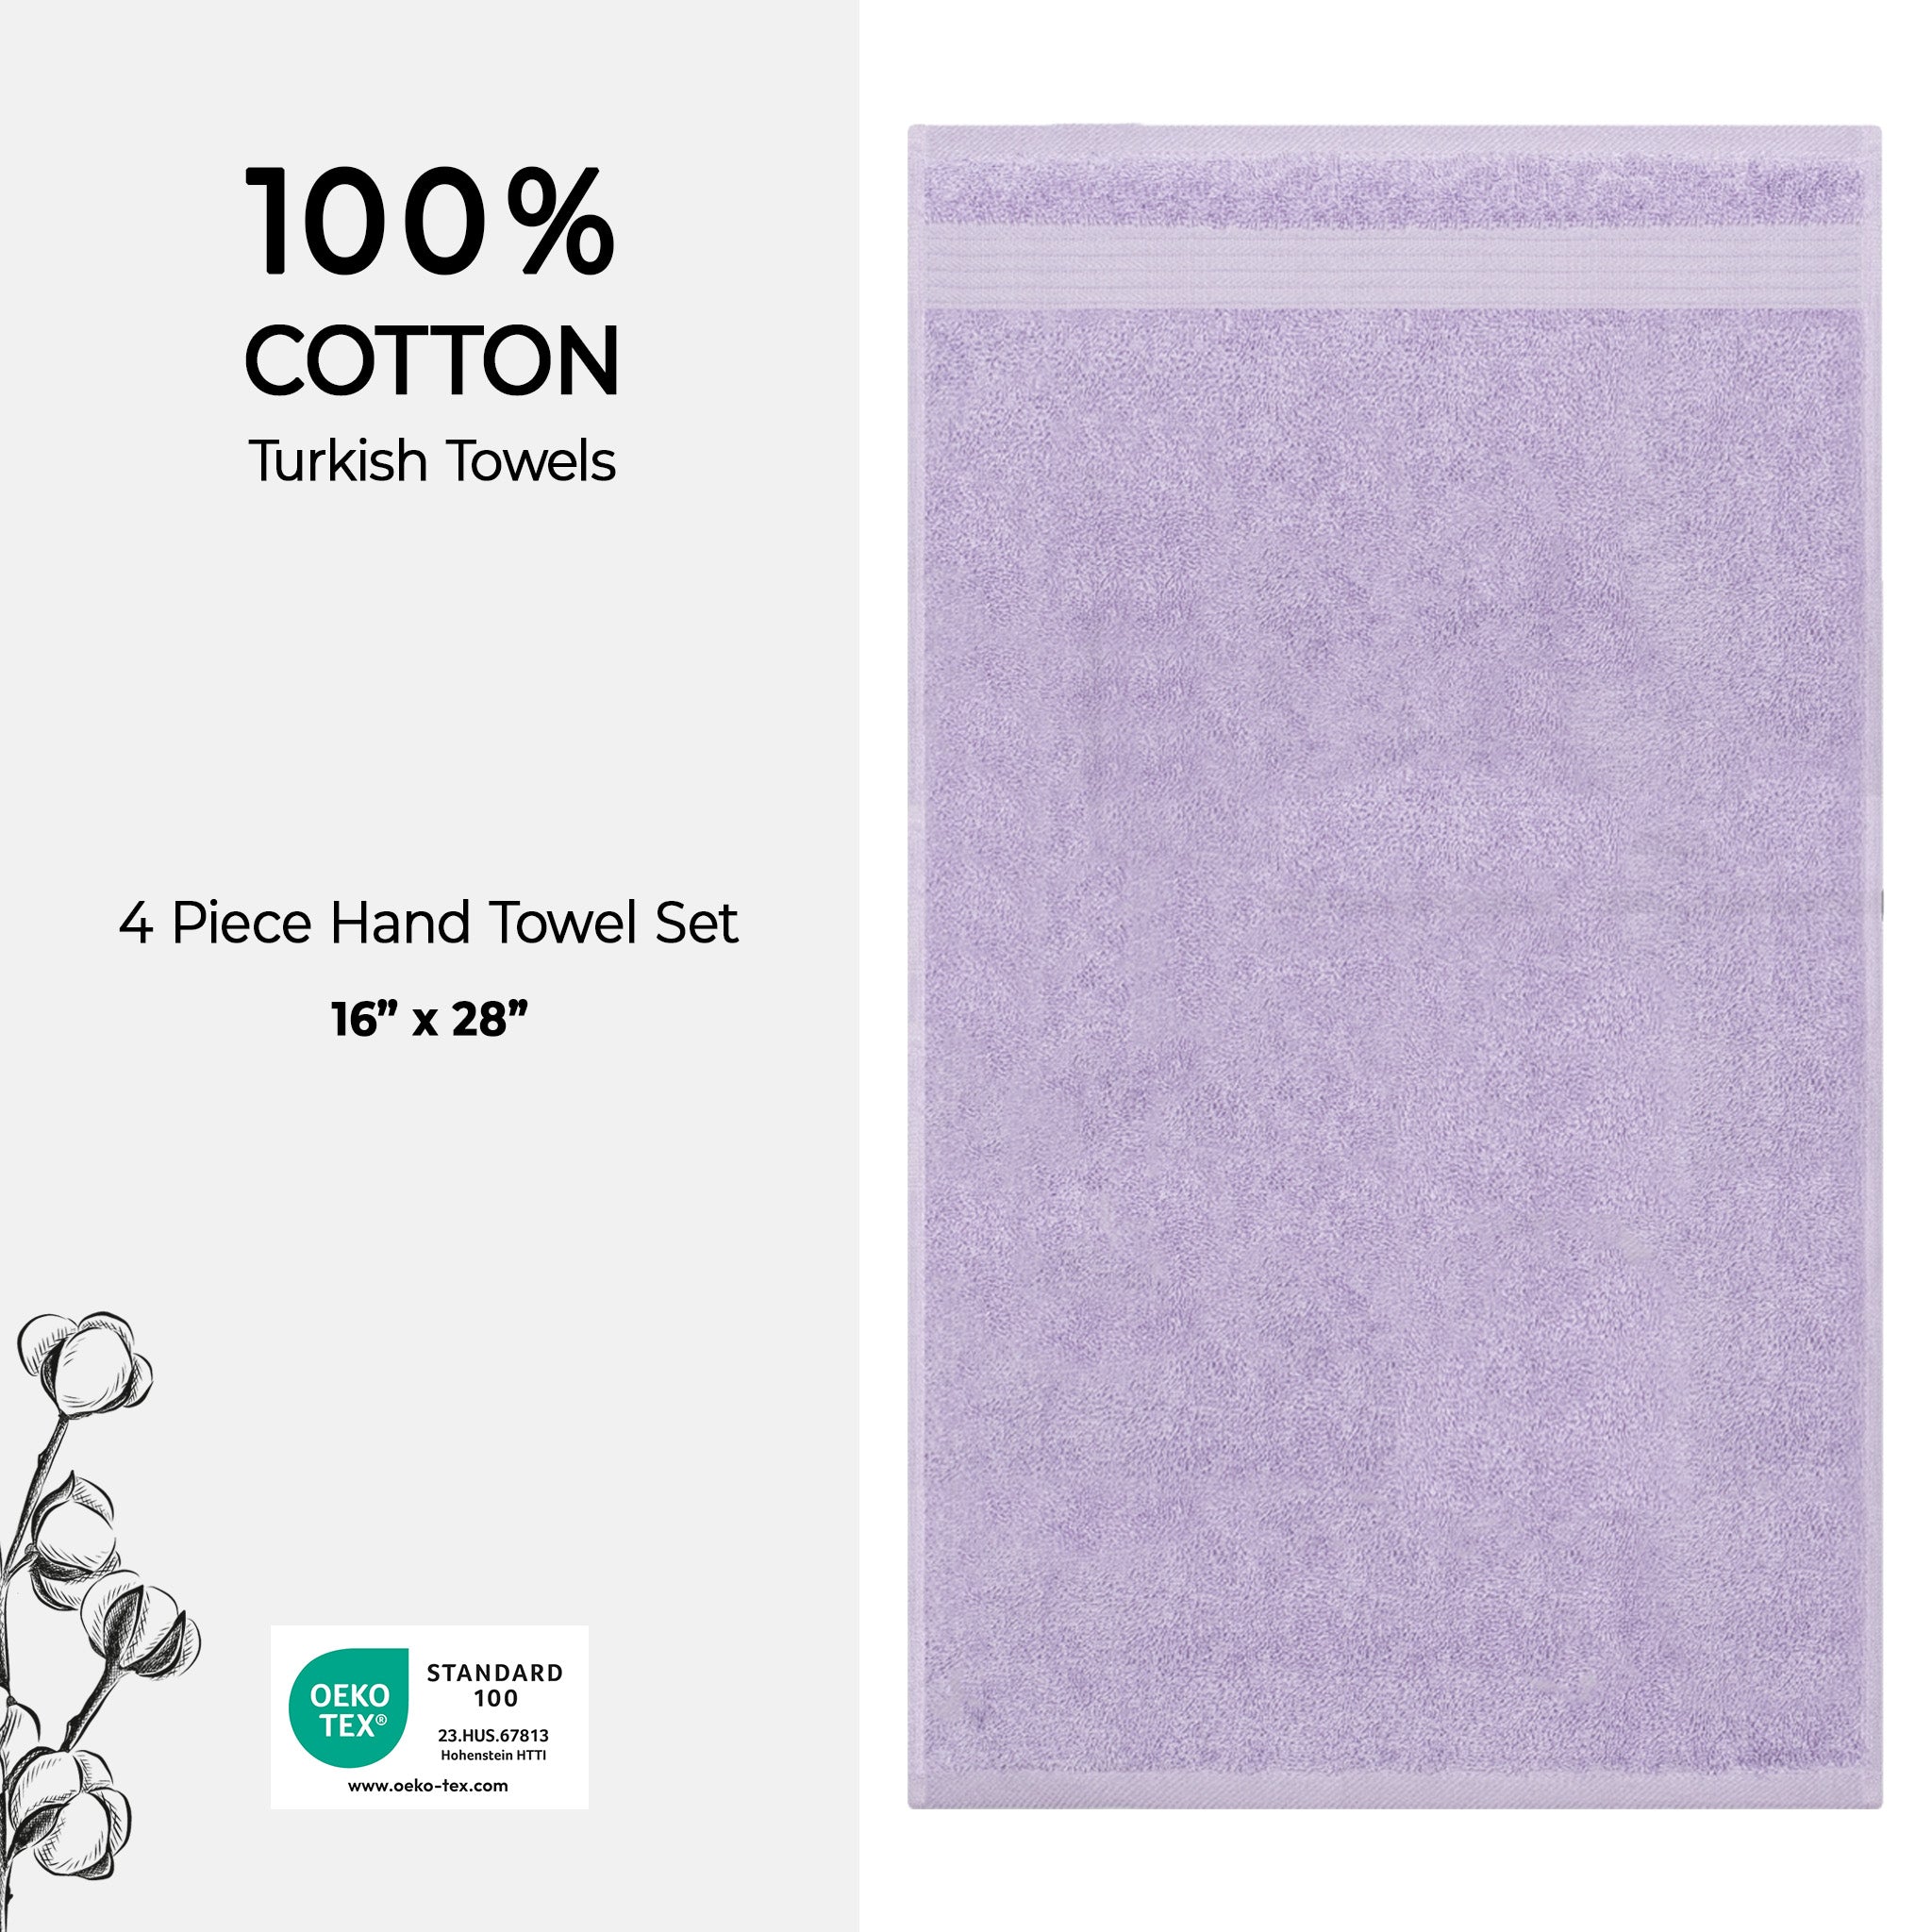 American Soft Linen Bekos 100% Cotton Turkish Towels, 4 Piece Hand Towel Set -lilac-04